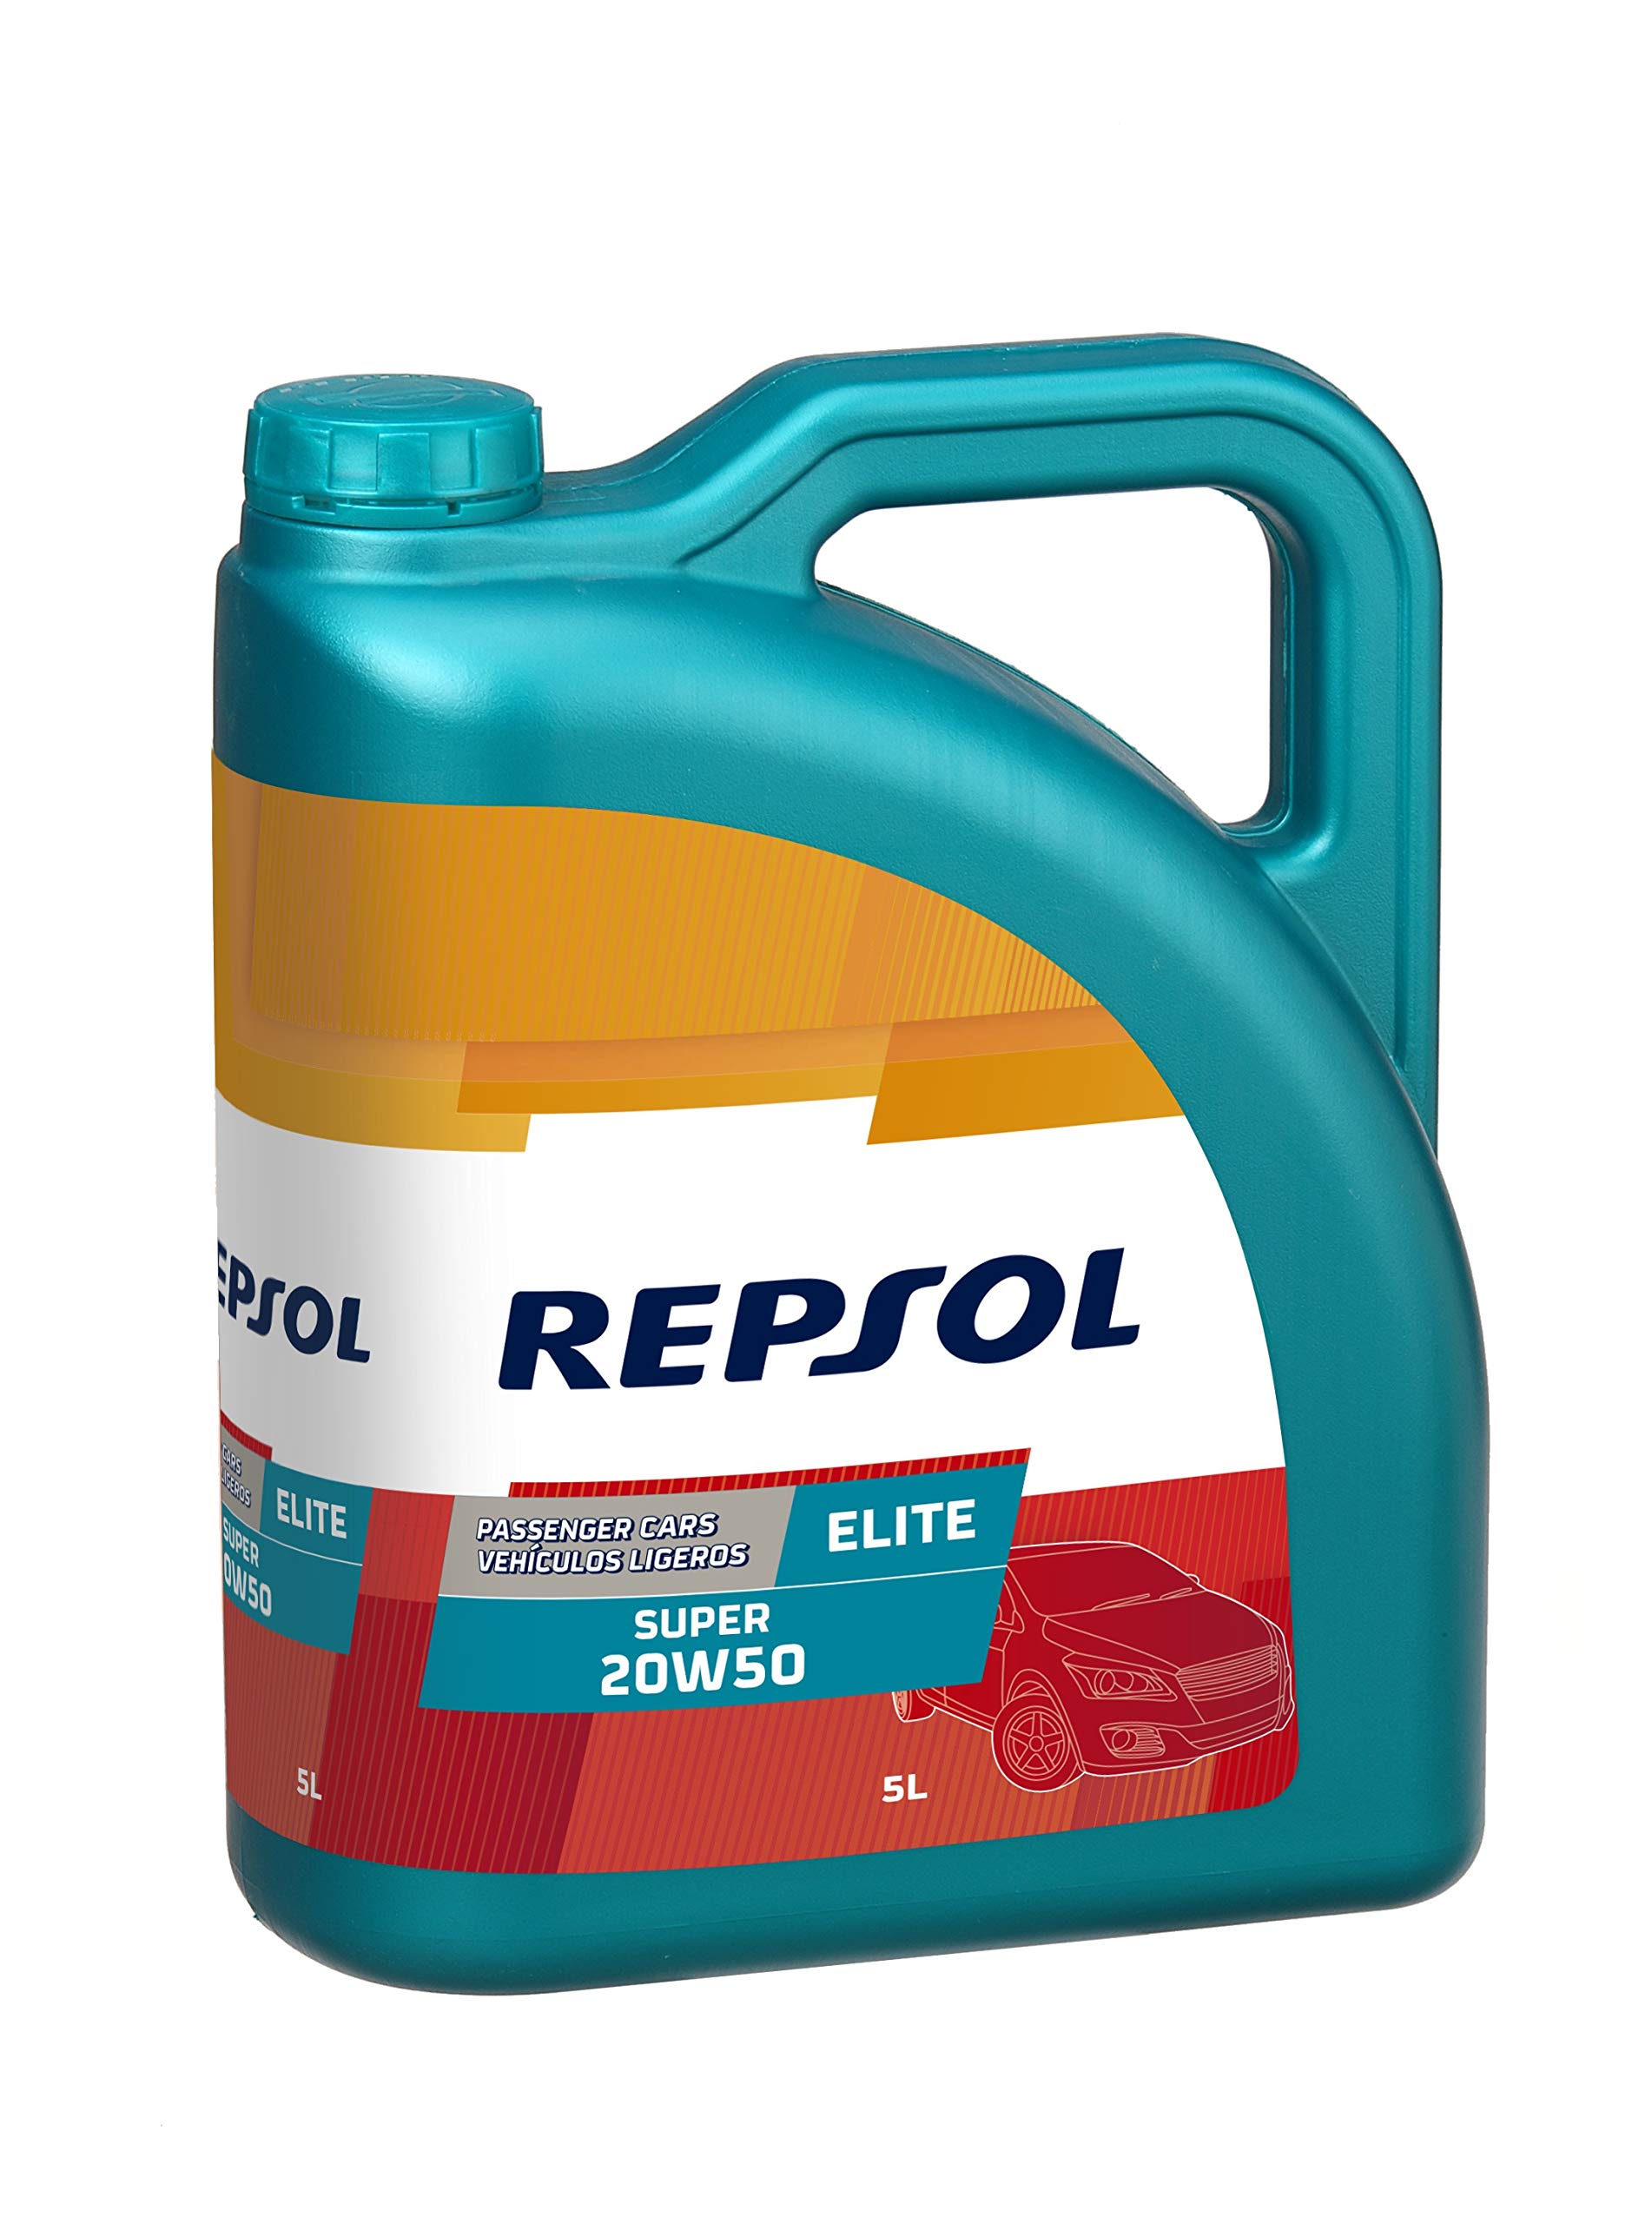 REPSOL ELITE SUPER 20W50, 5 Liter von Repsol